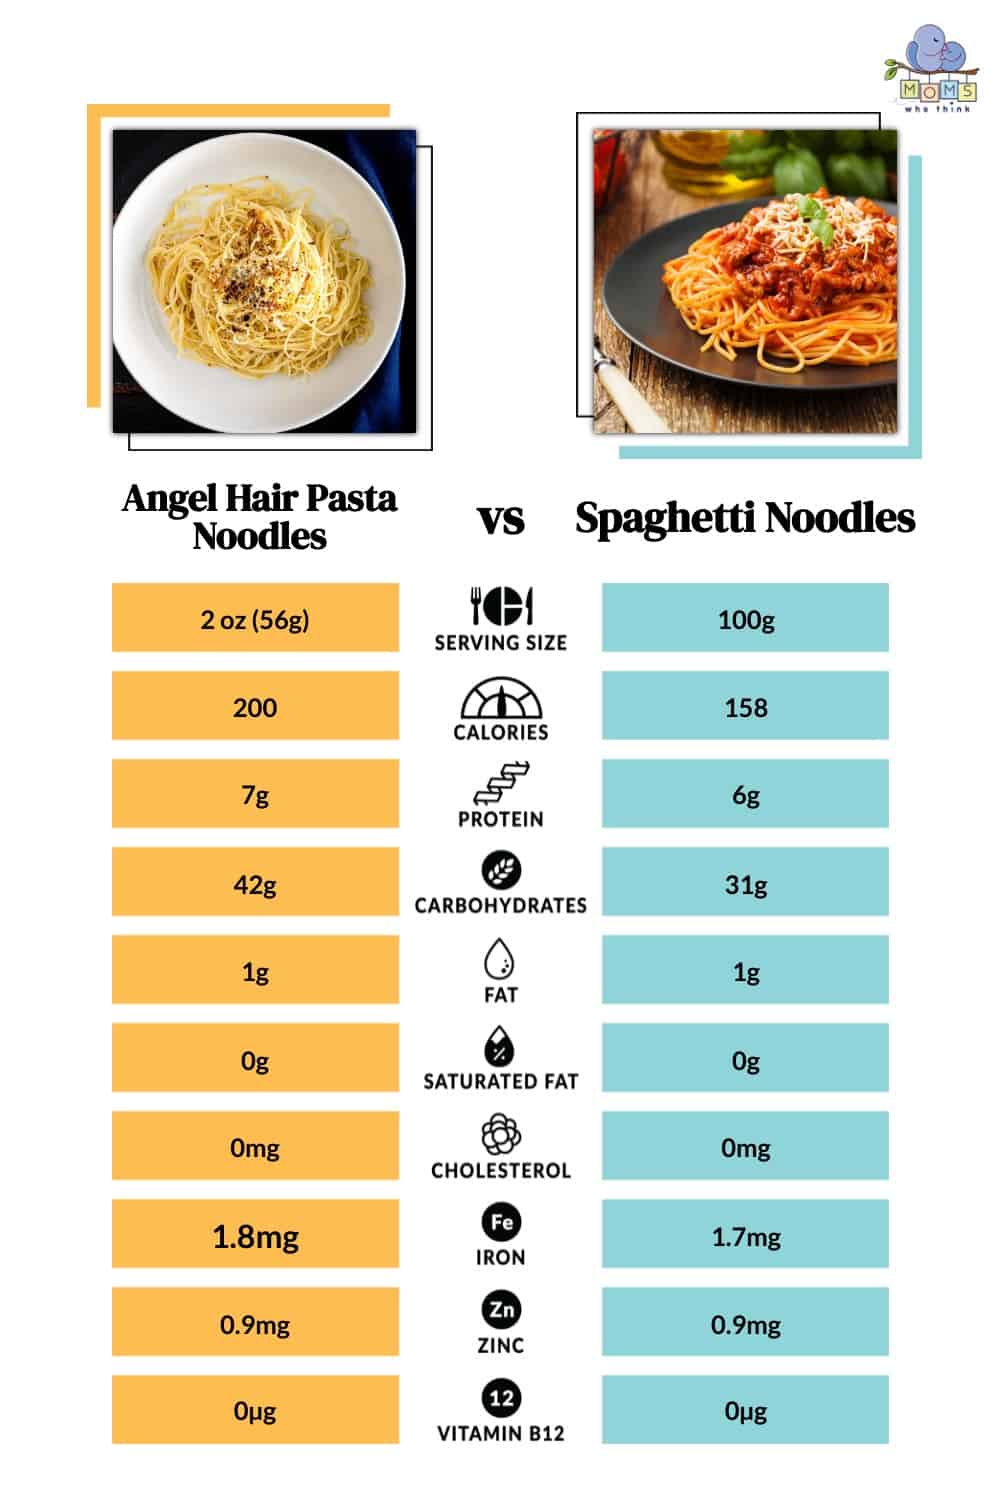 Angel Hair Pasta Noodles Nutritional Comparison v